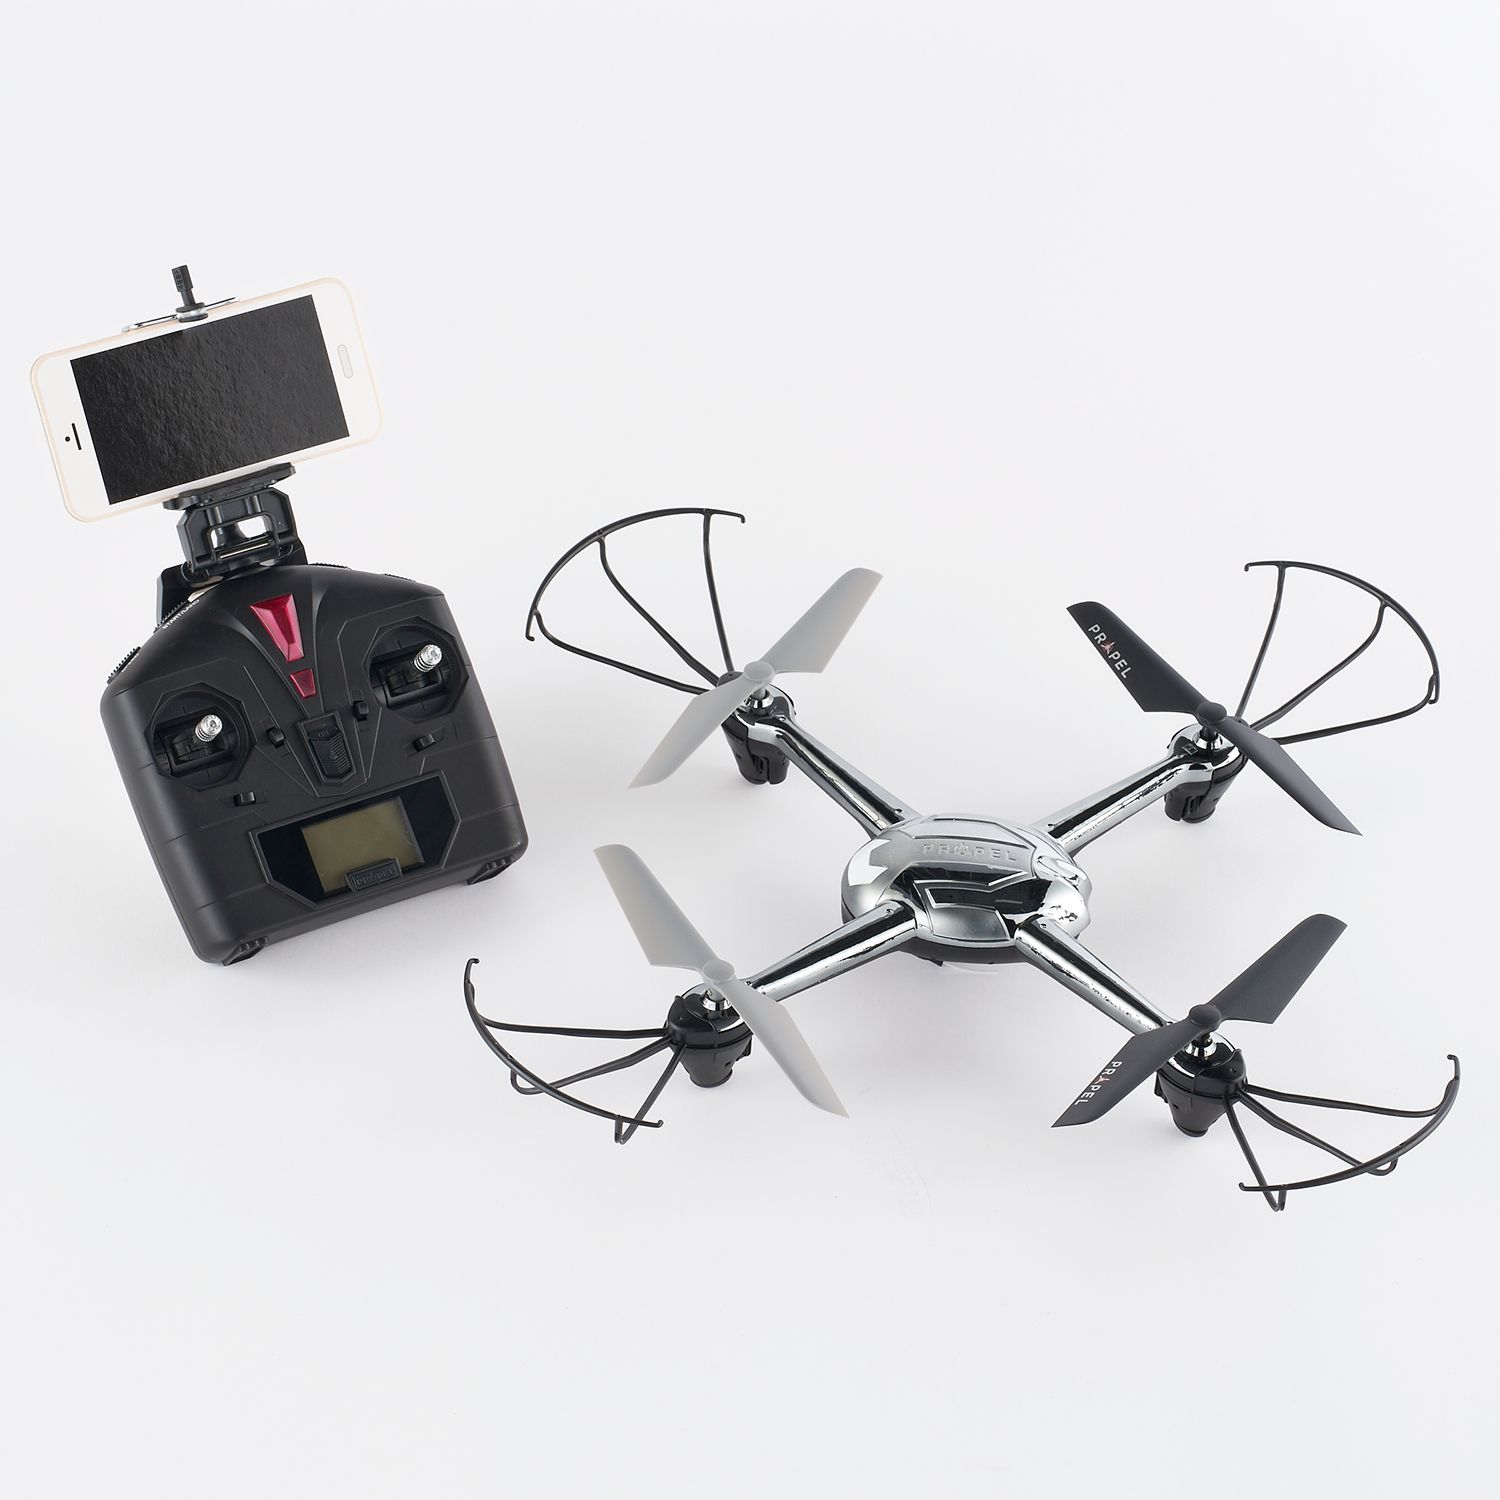 propel prowler drone